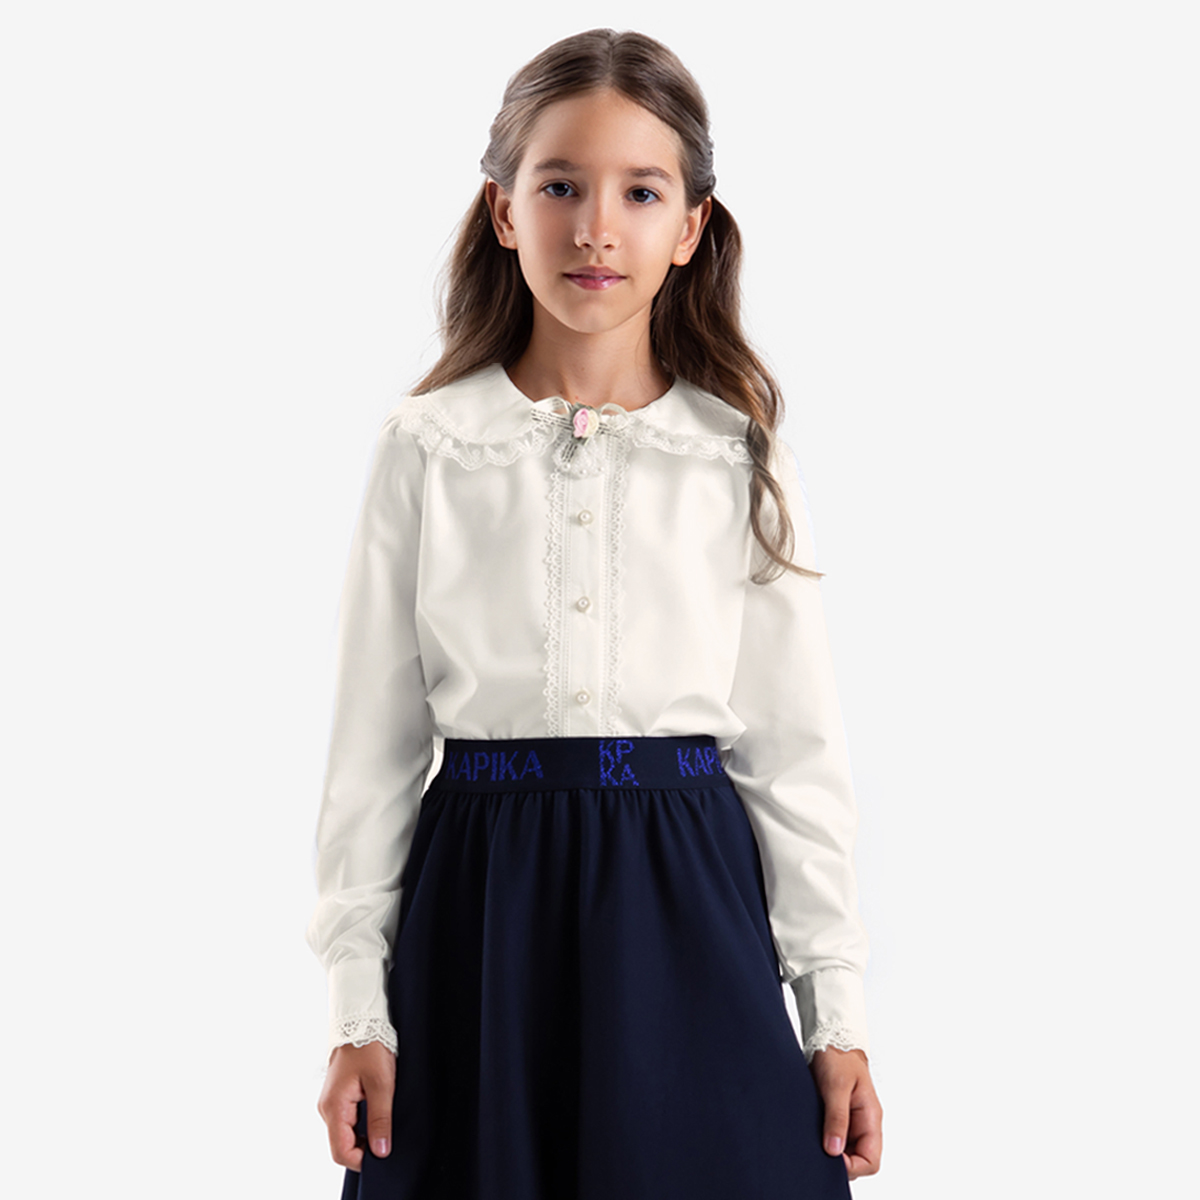 Блузка детская Kapika IJGCB01-02, цвет экрю, размер 122 блузка детская gulliver 12302gmc2203 белый размер 104